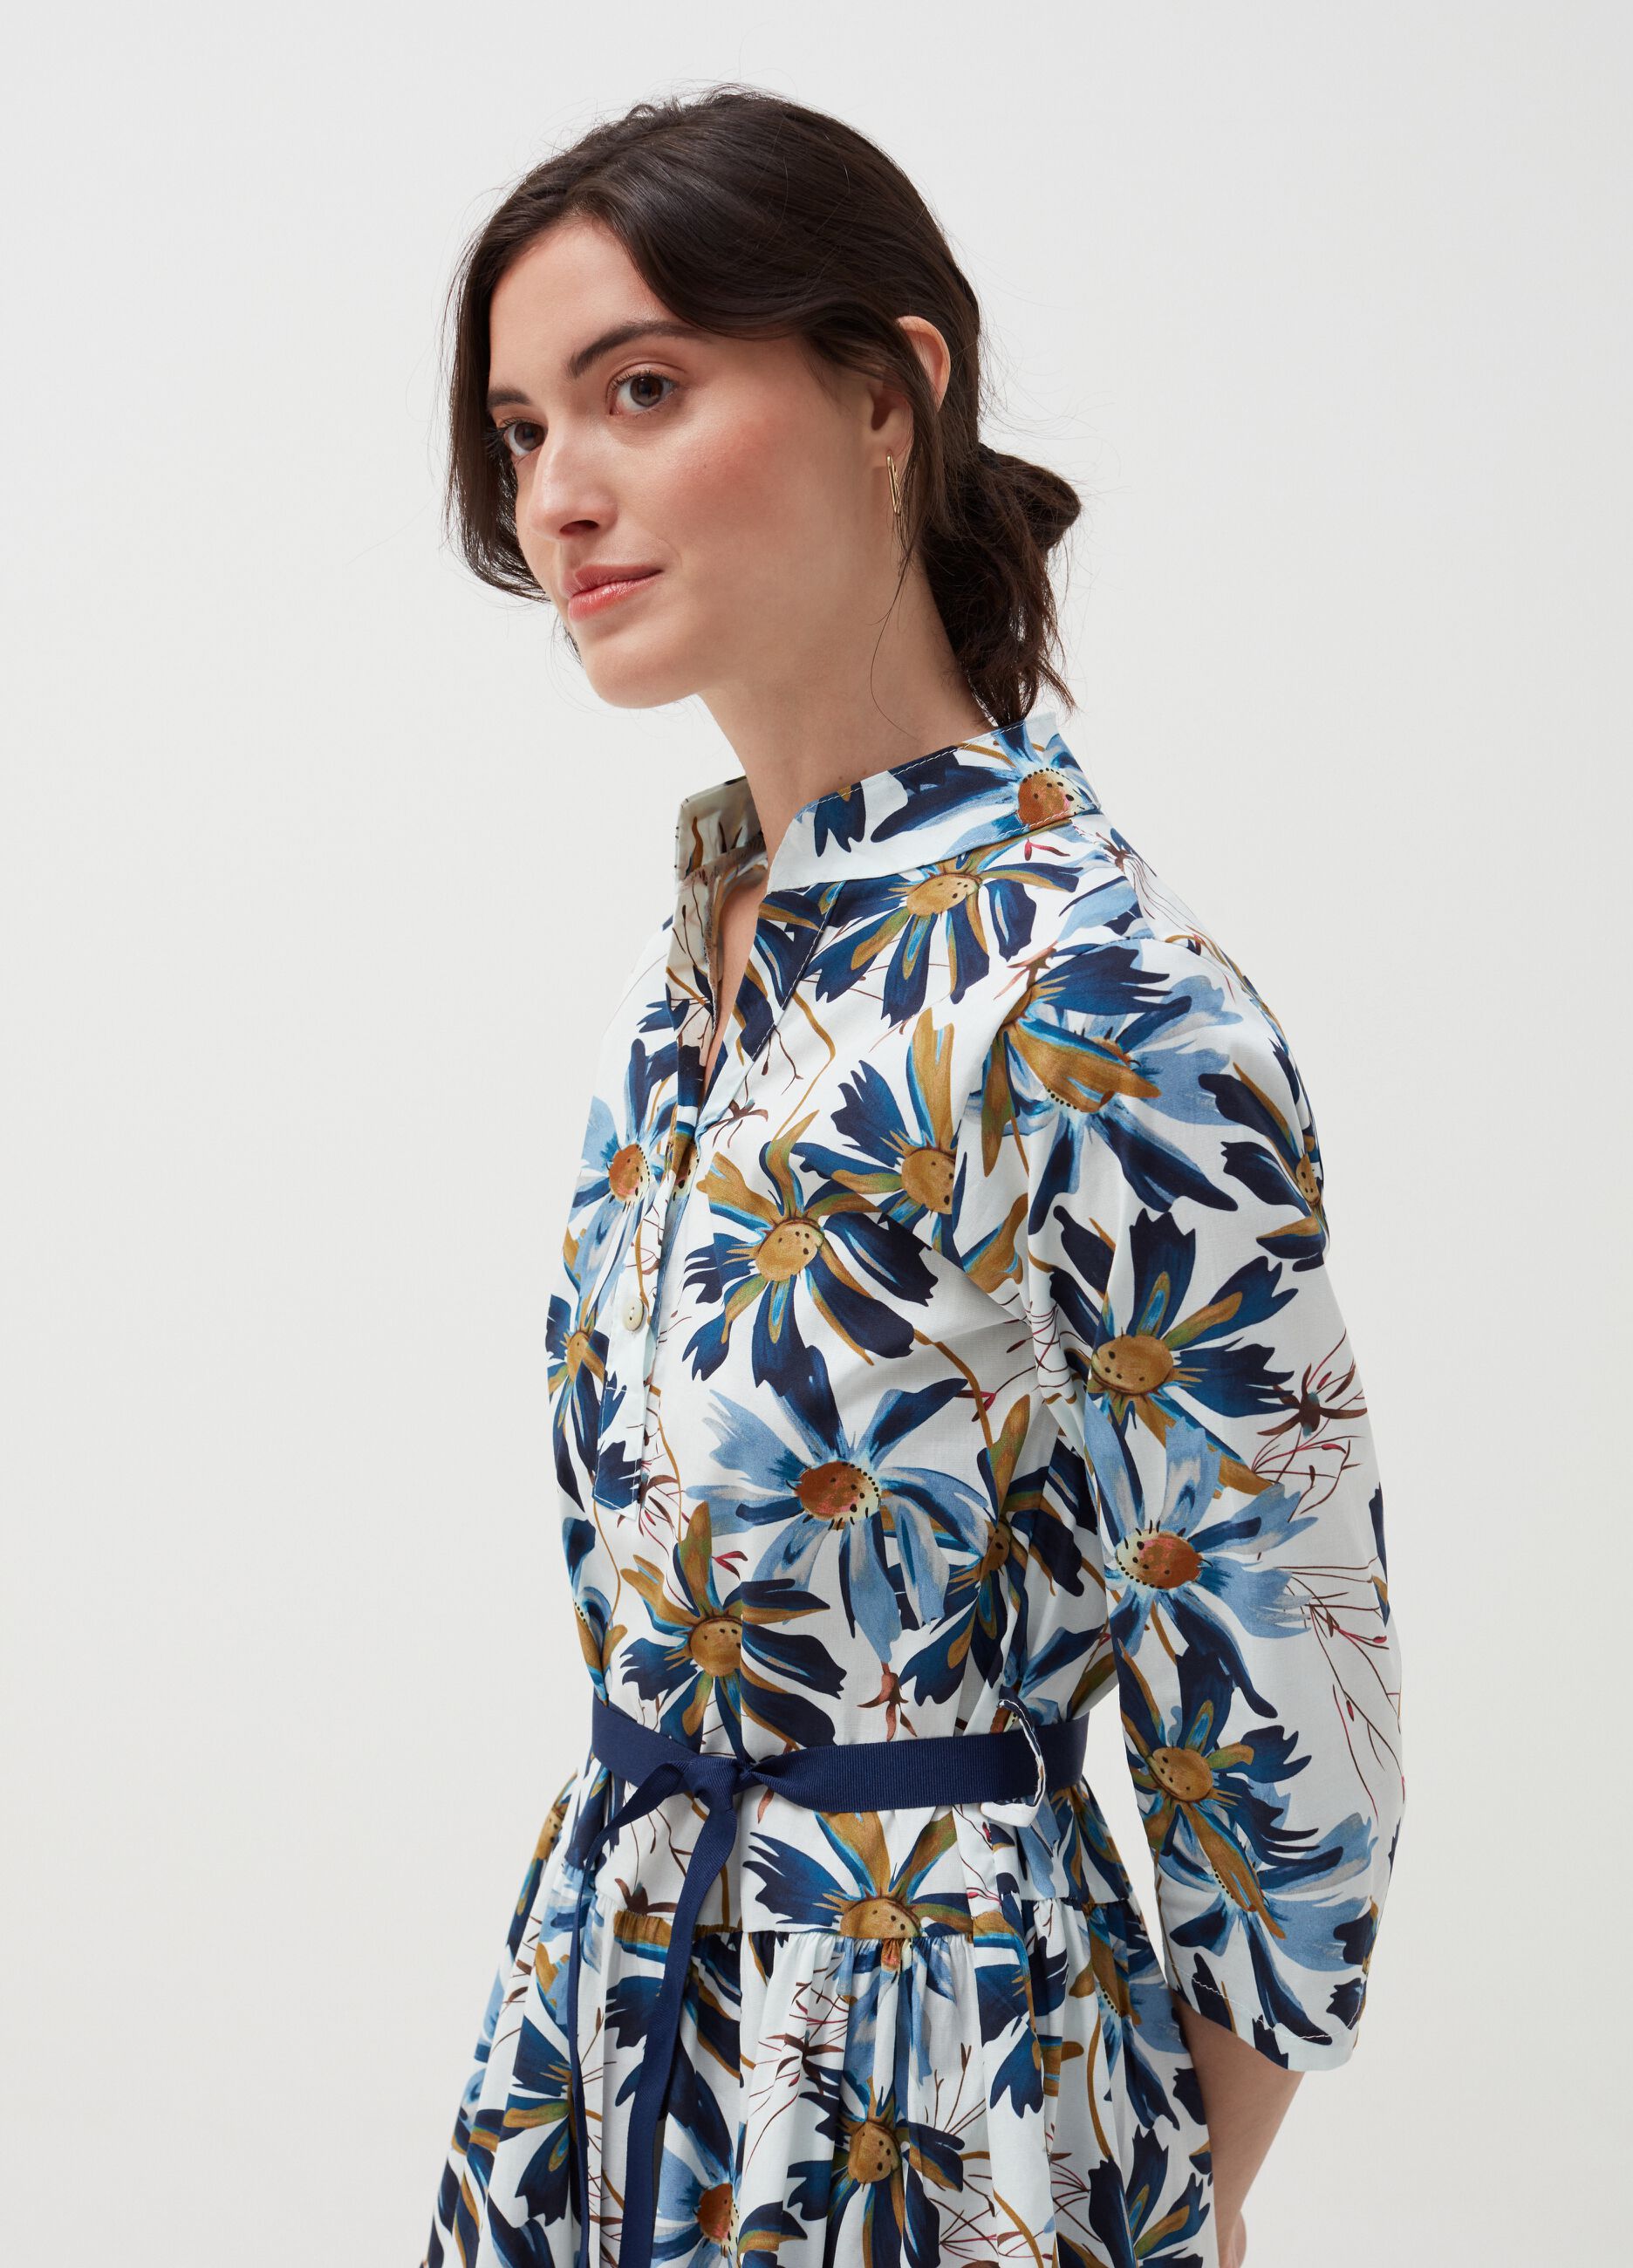 Hybrid floral shirt dress